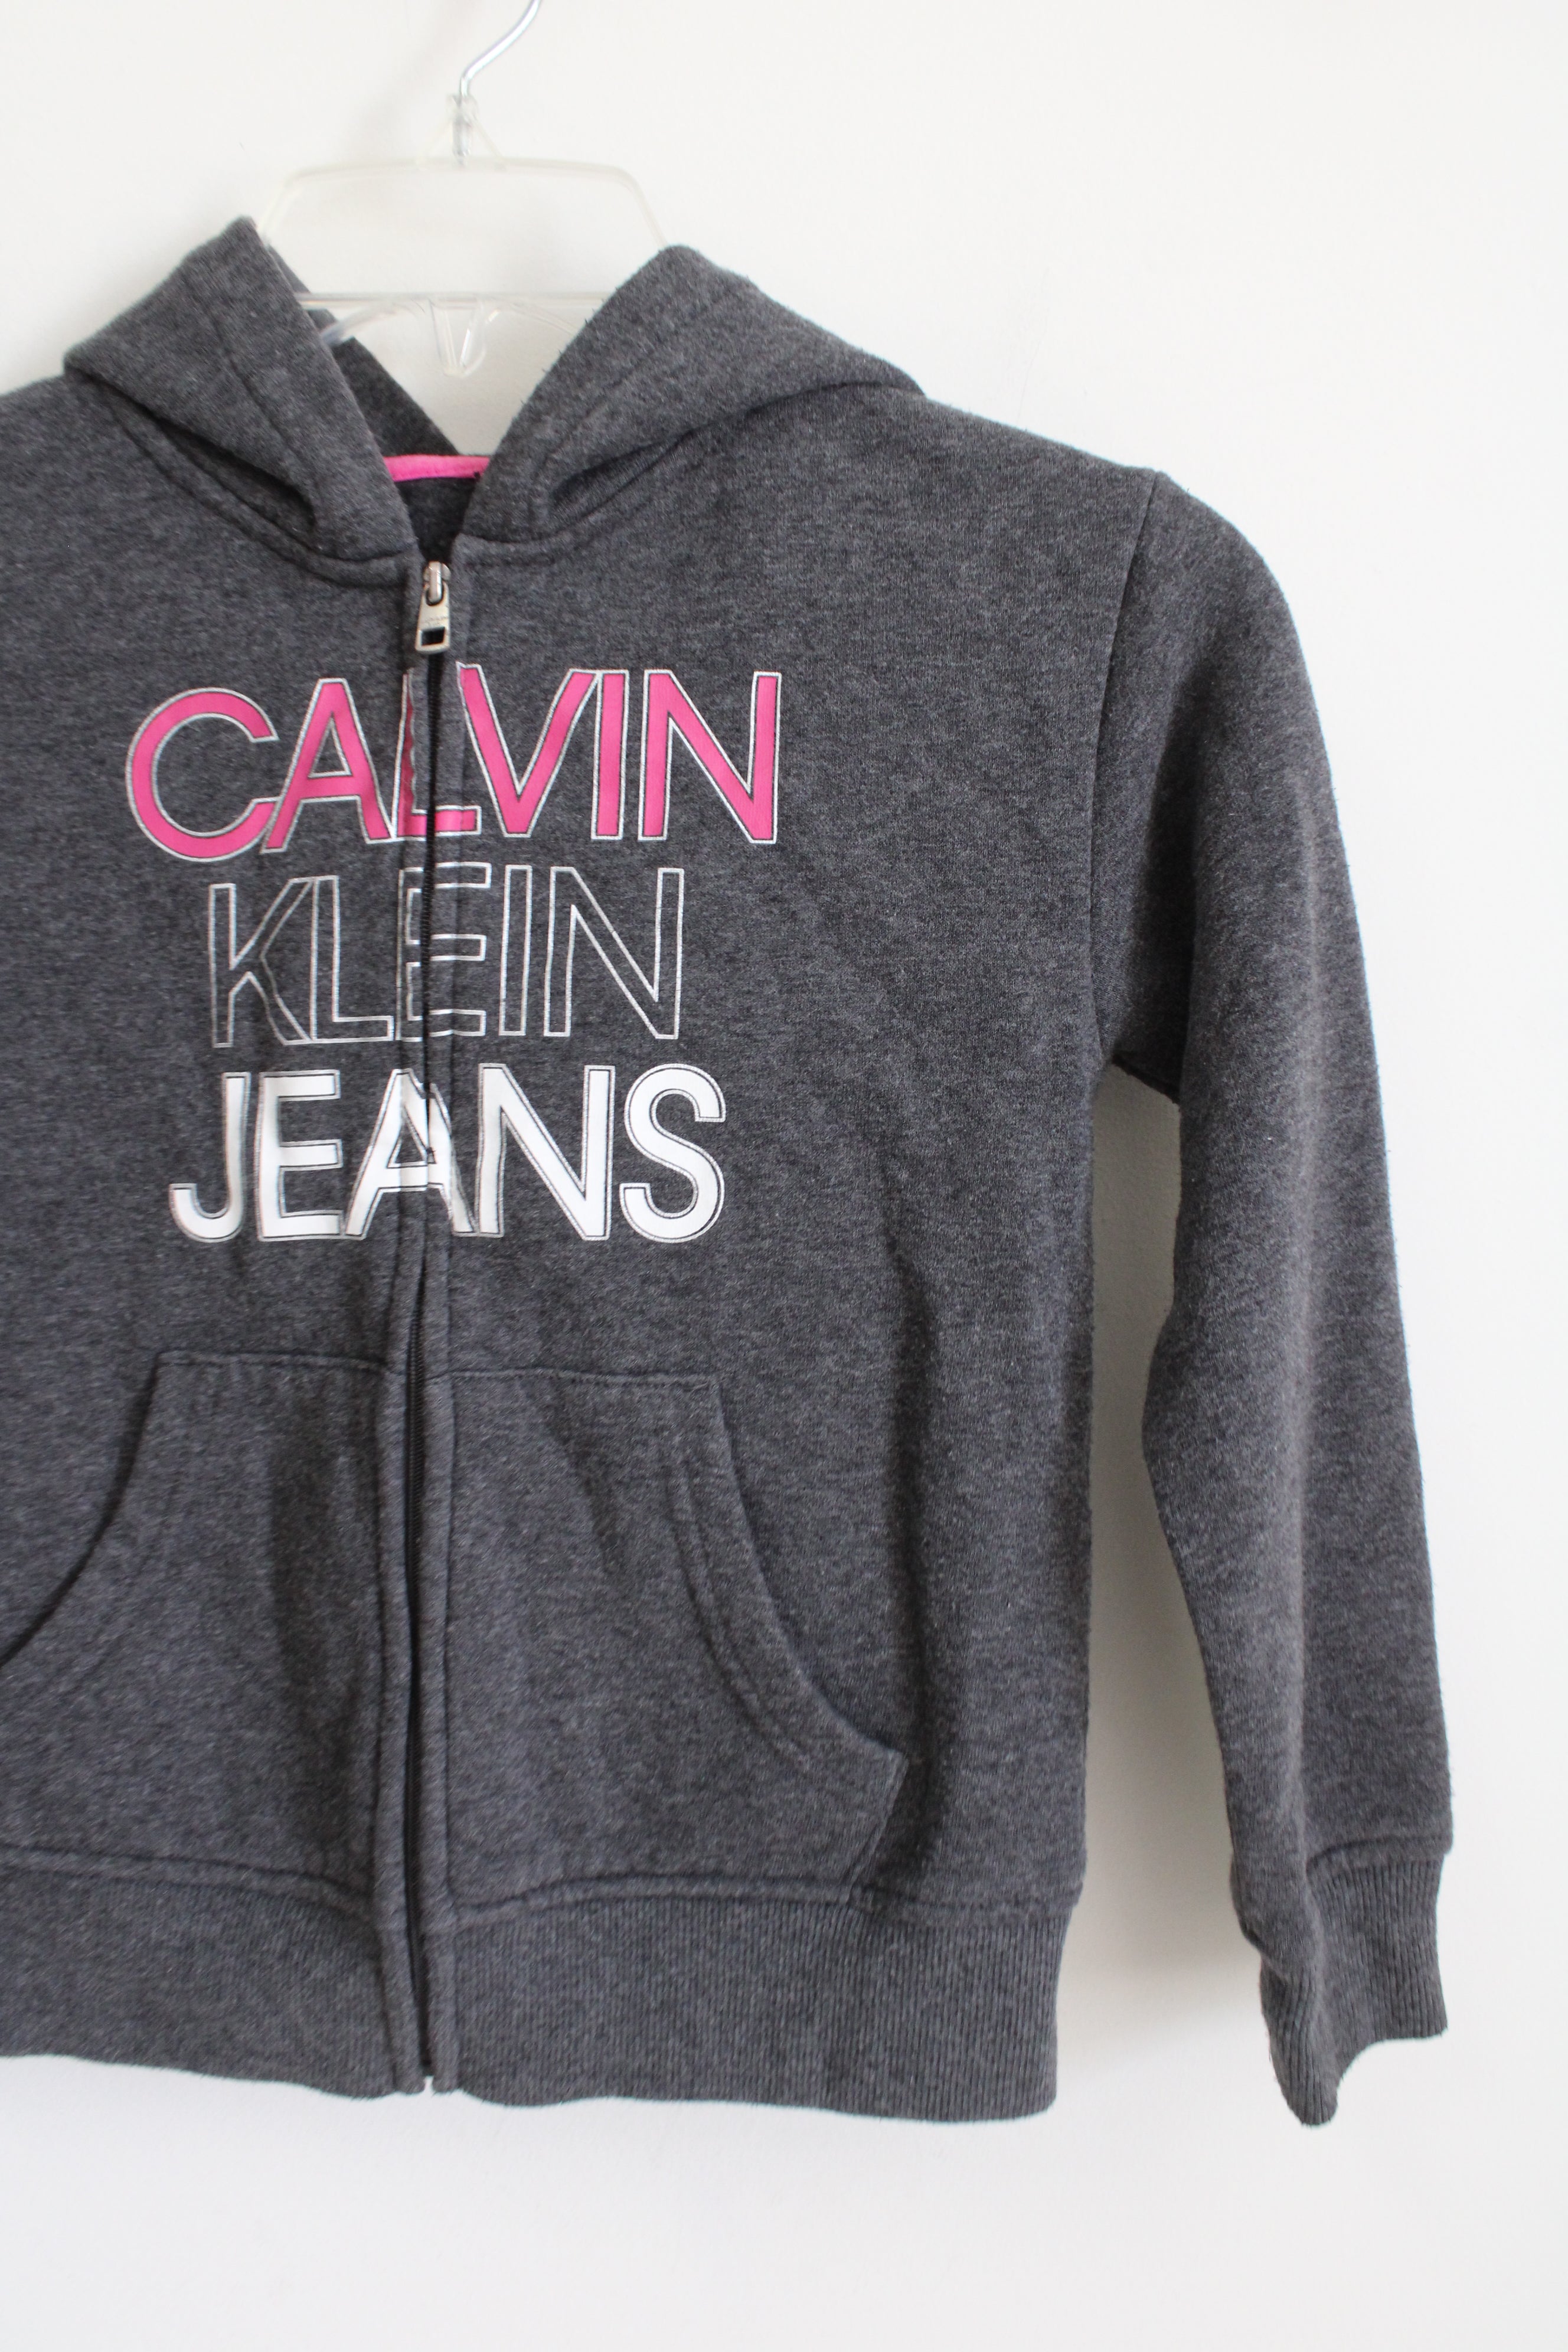 Calvin Klein Gray and Pink Full Zip Jacket | 8